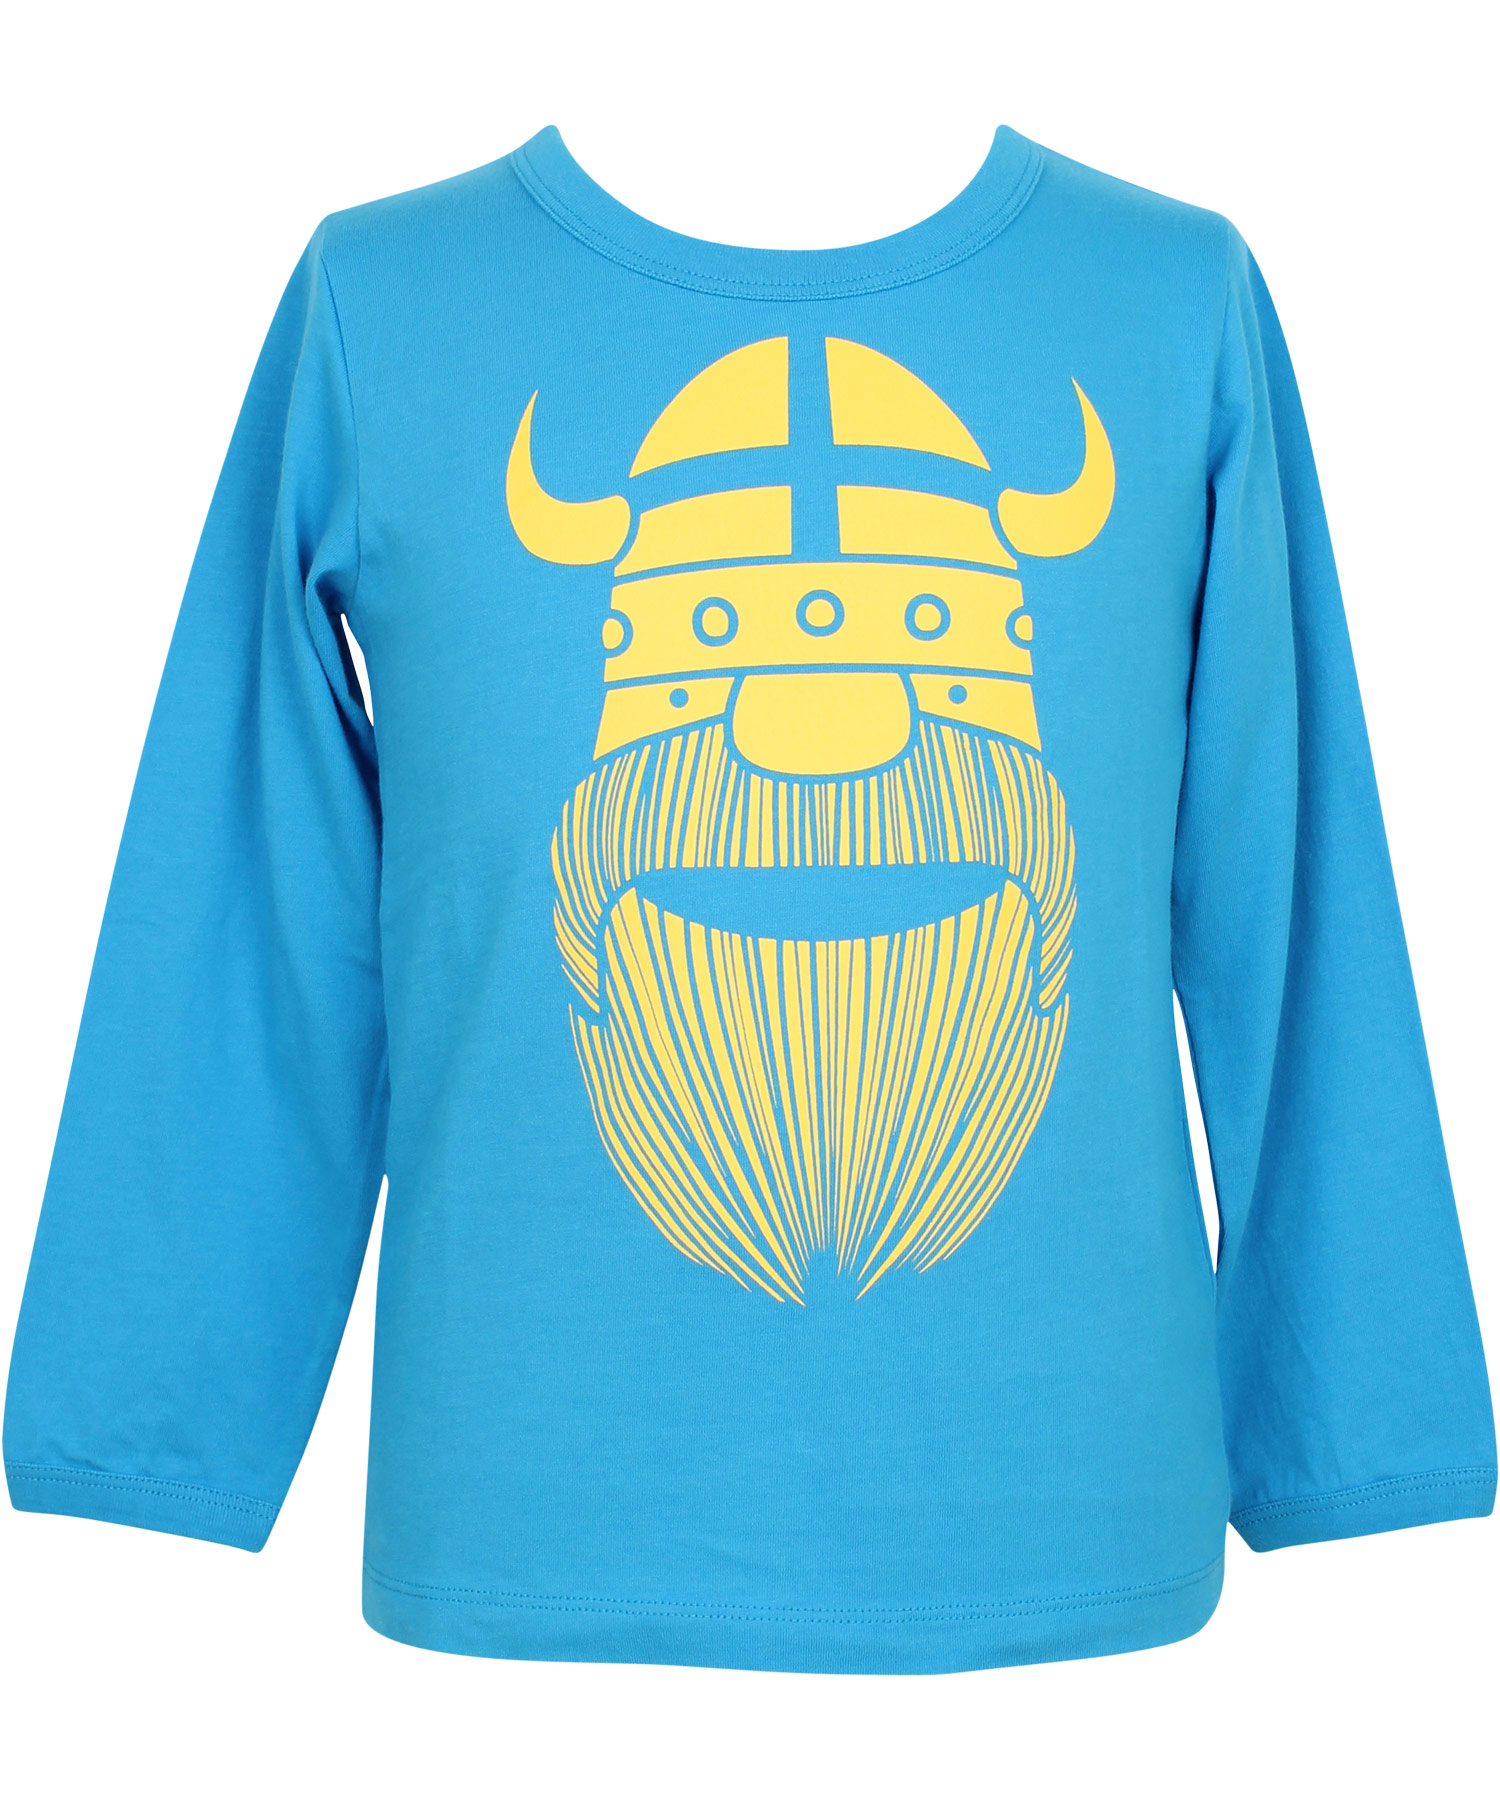 New! Danefæ gorgeous blue t-shirt with yellow Erik the Viking (Basic LS)